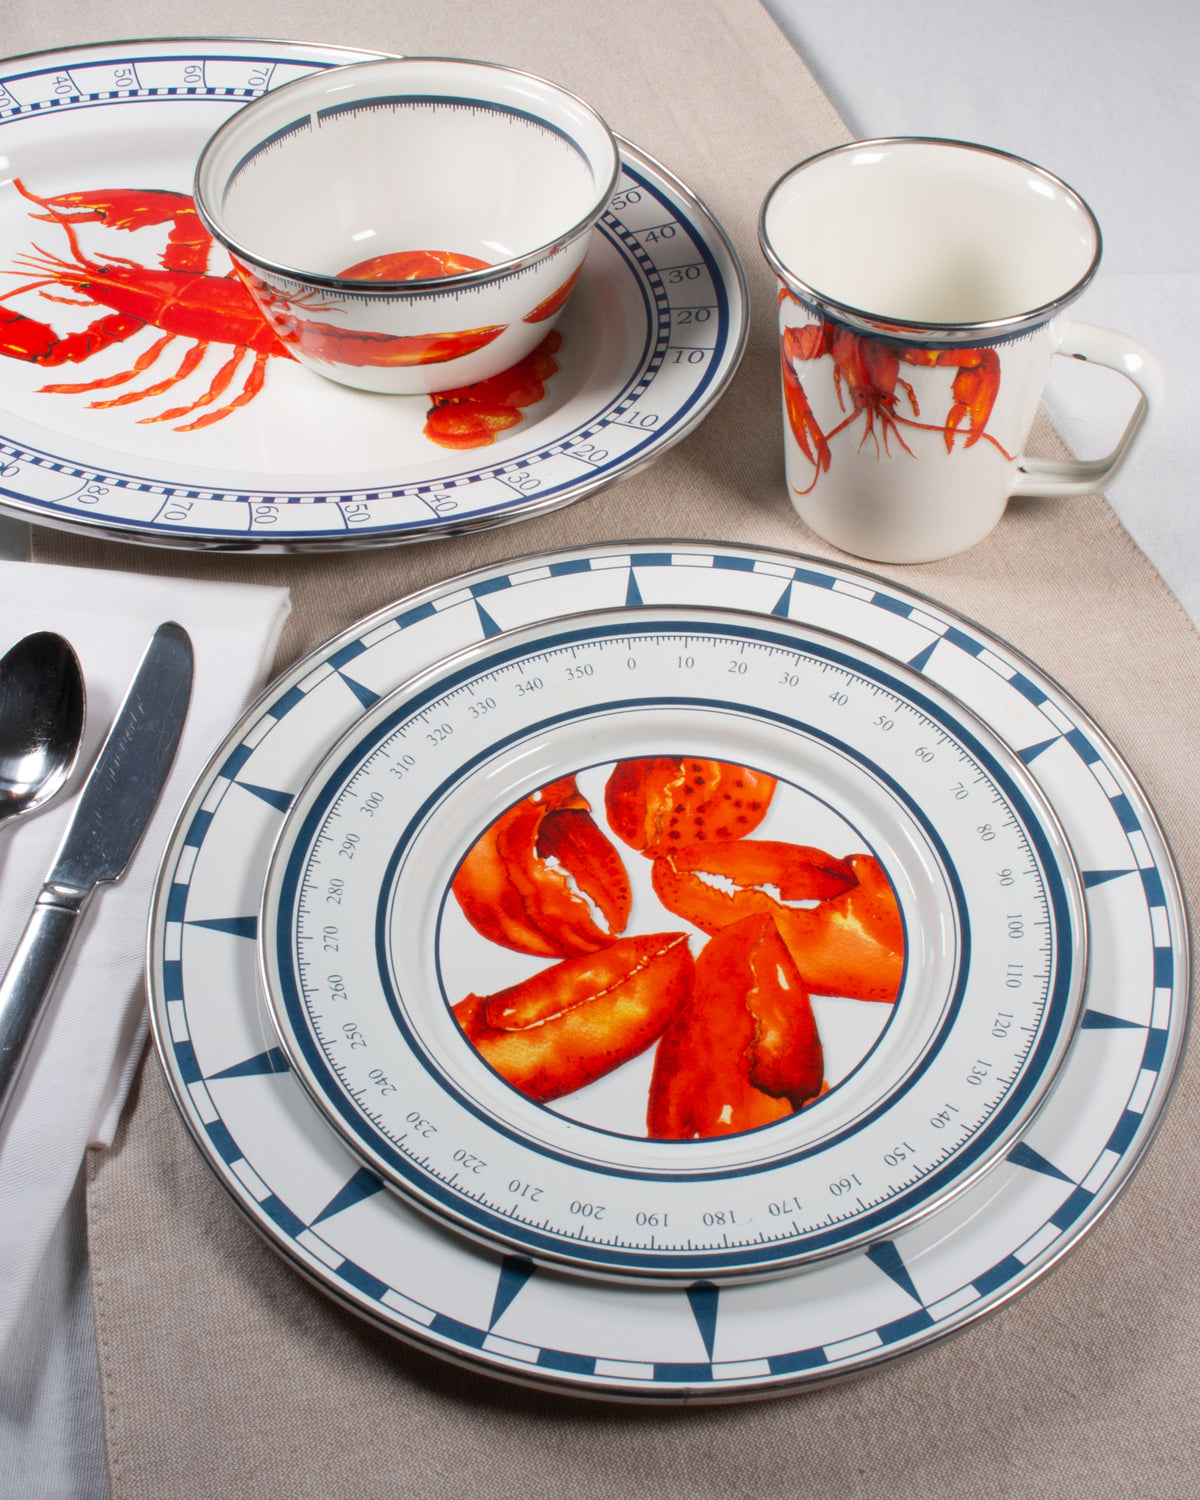 Lobster Enamelware Oval Platter